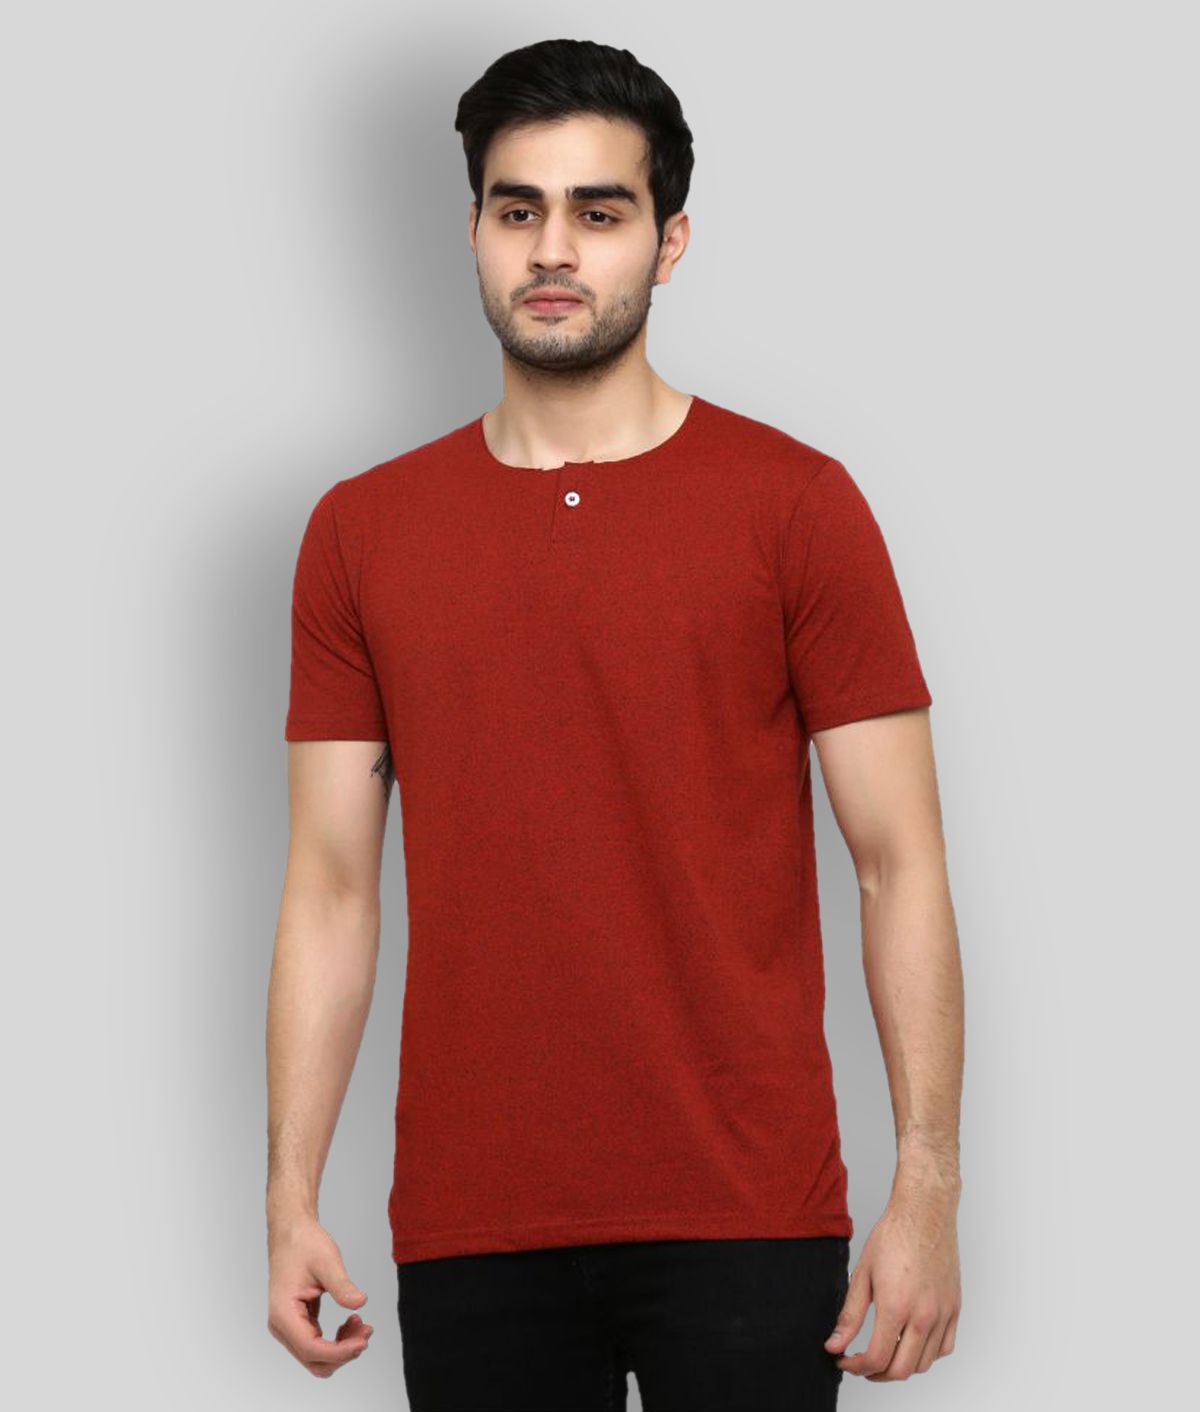     			GENTINO - Red Cotton Blend Regular Fit Men's T-Shirt ( Pack of 1 )